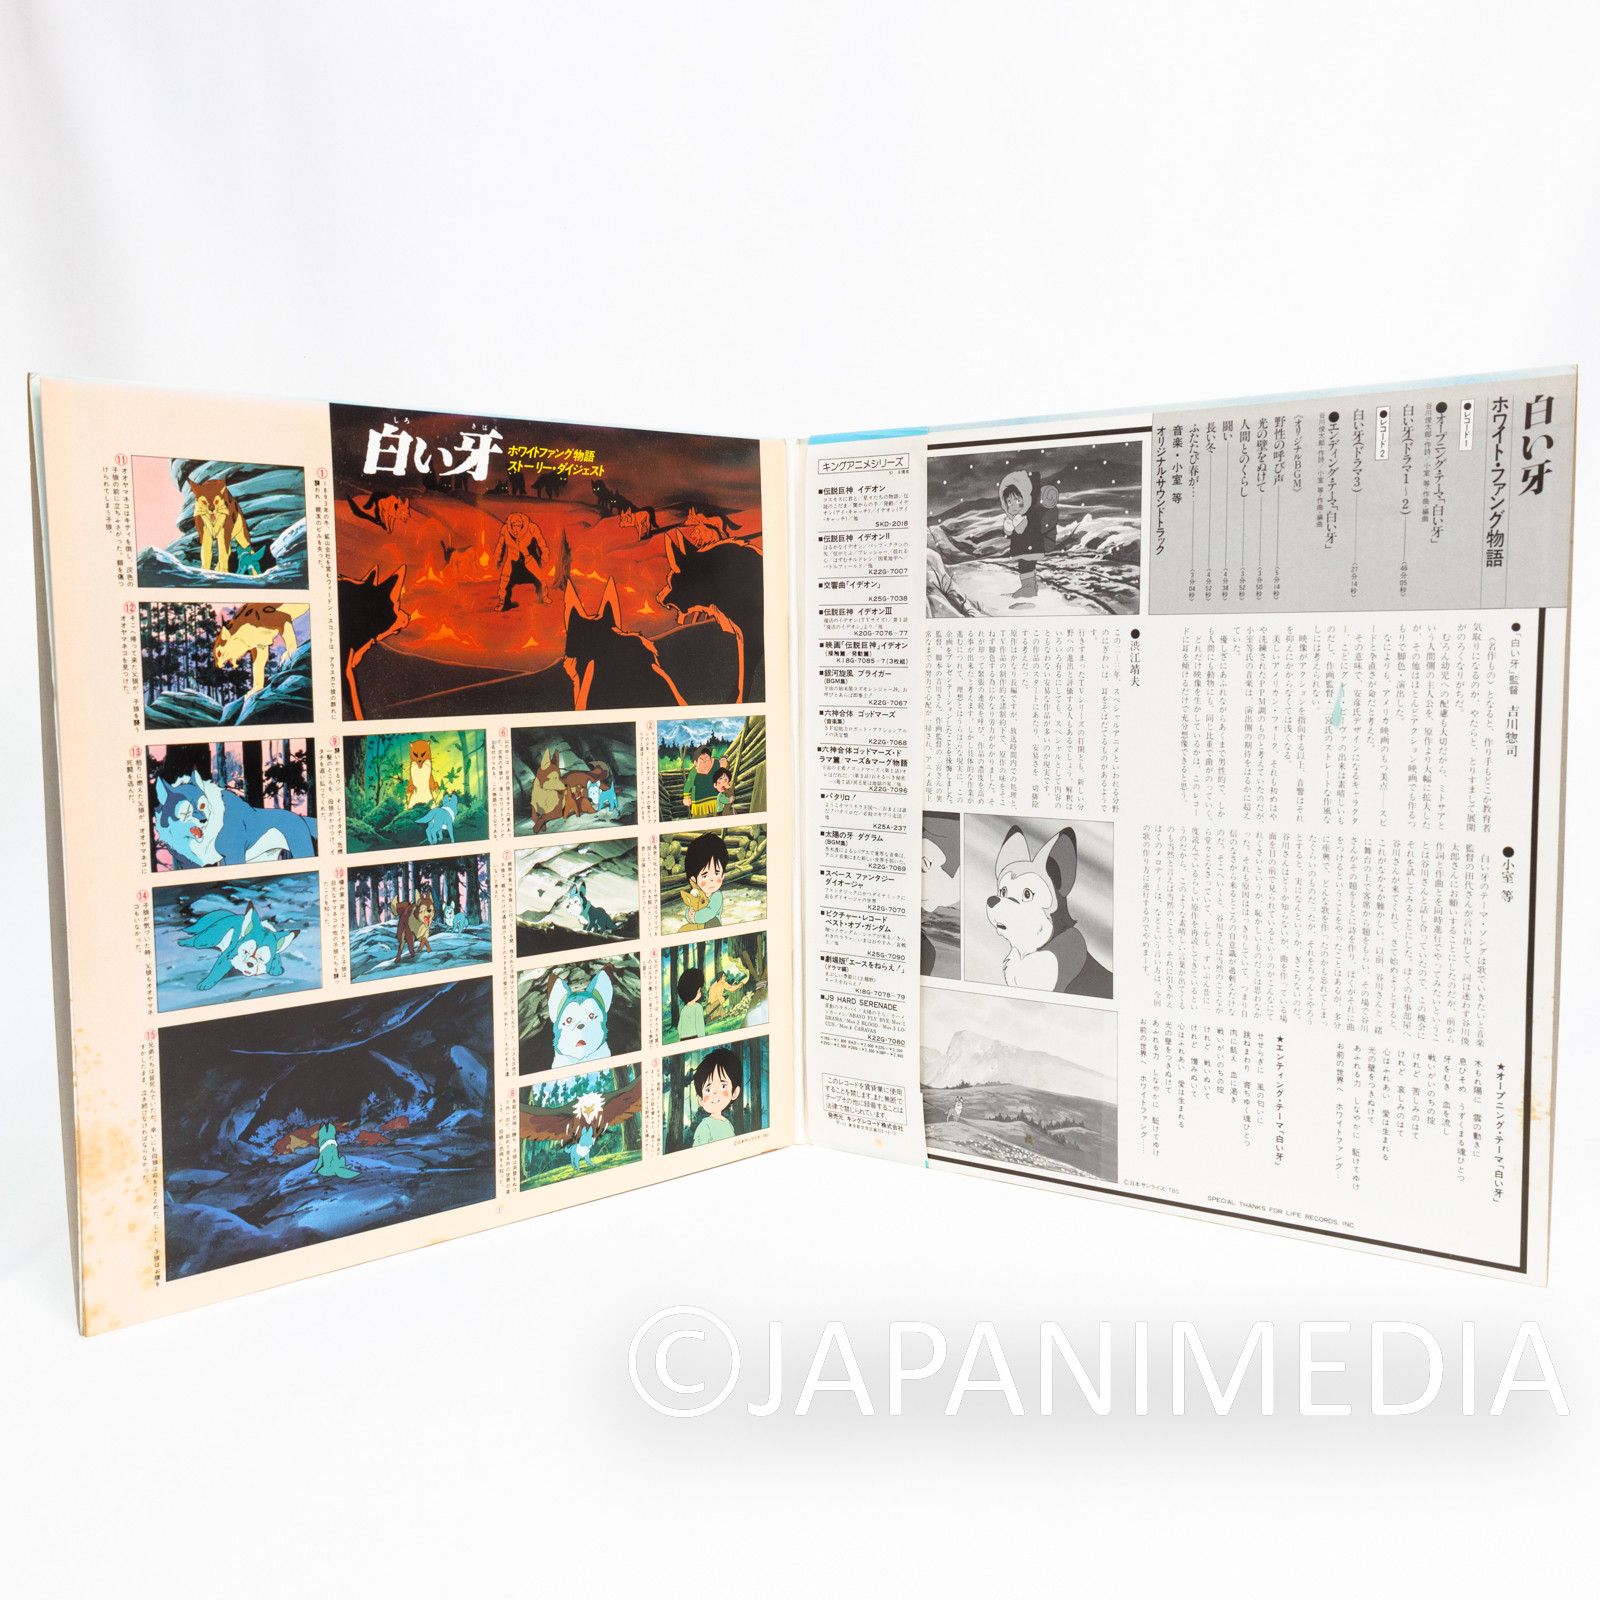 White Fang Drama Dialogue +Soundtrack 2LP Vinyl Record K18G-7094-5